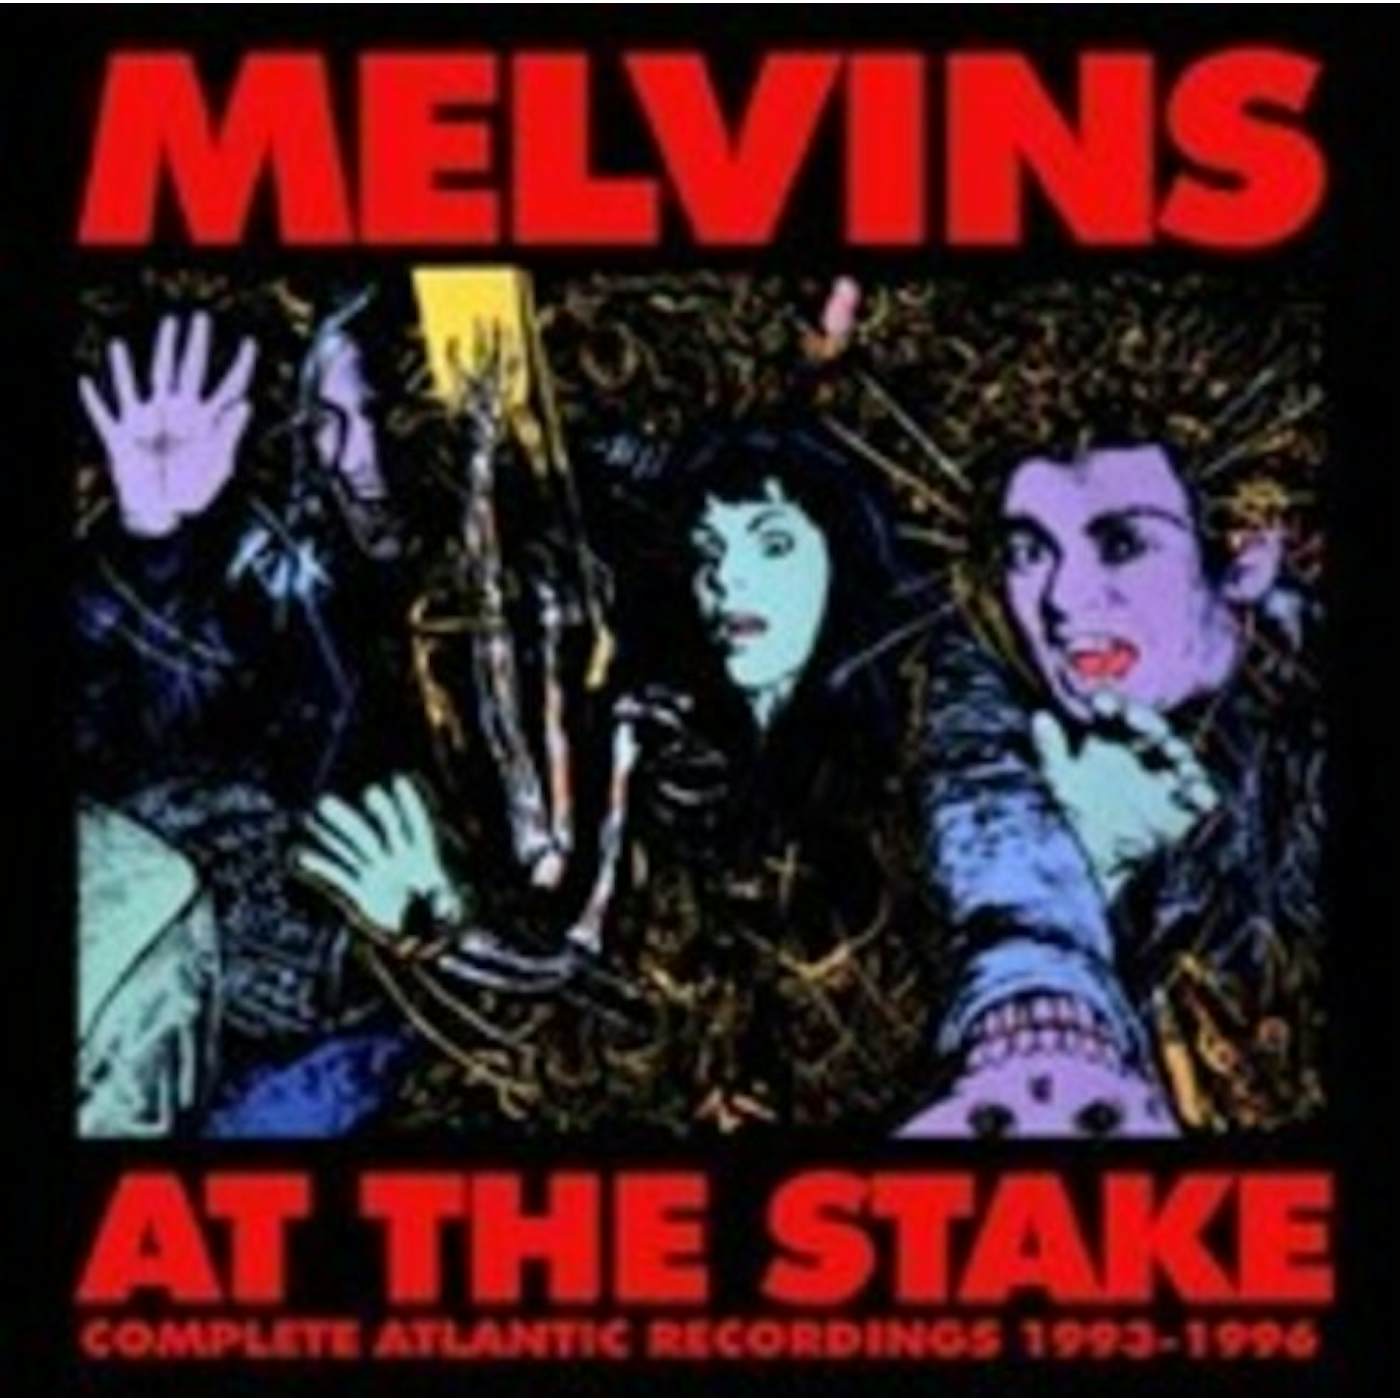 Melvins AT THE STAKE: ATLANTIC RECORDINGS 1993-1996 CD